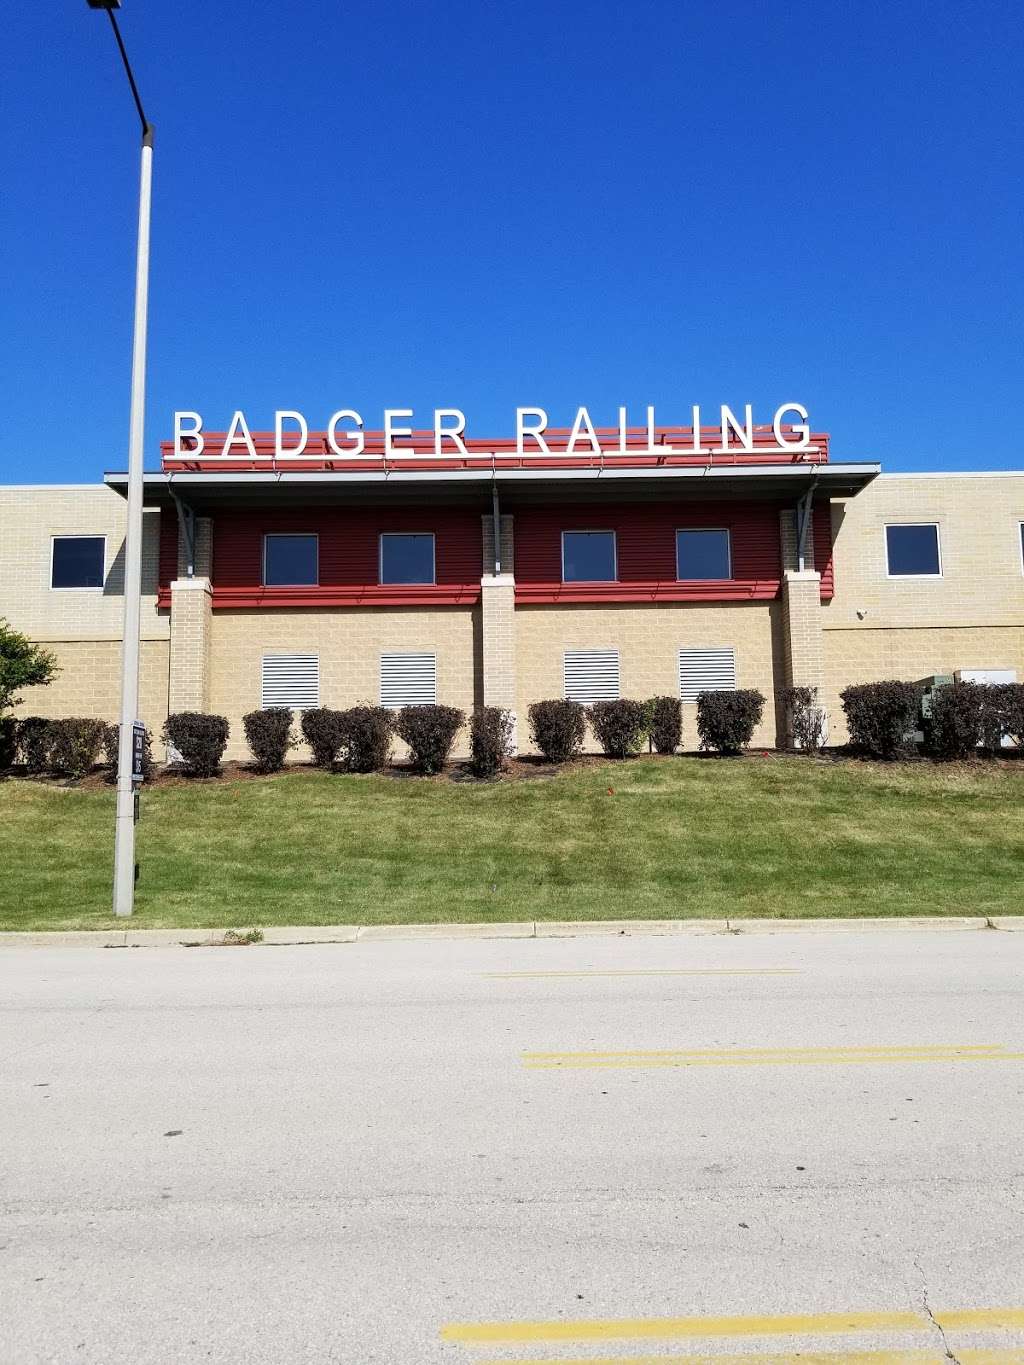 Badger Railing | 3880 W Milwaukee Rd, Milwaukee, WI 53208, USA | Phone: (414) 672-6090